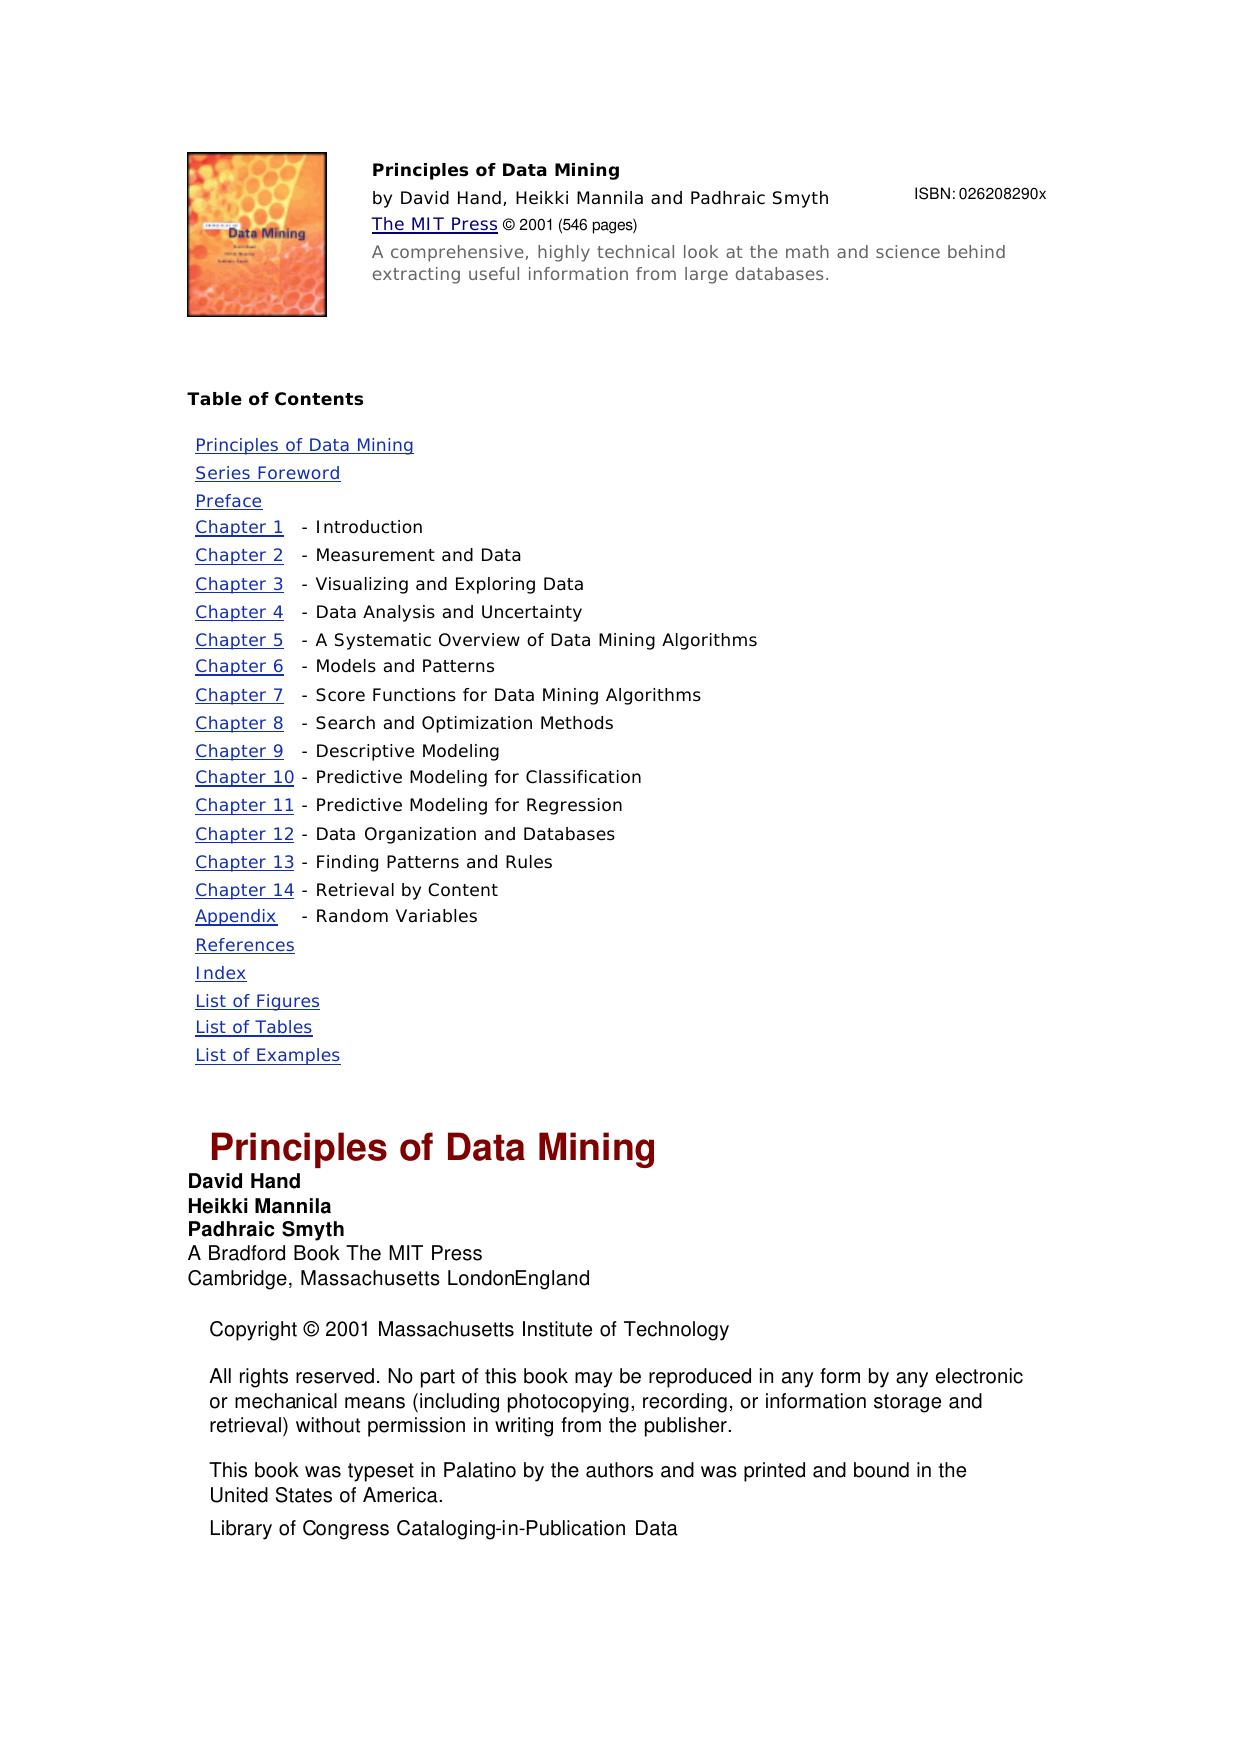 Principles of Data Mining.doc